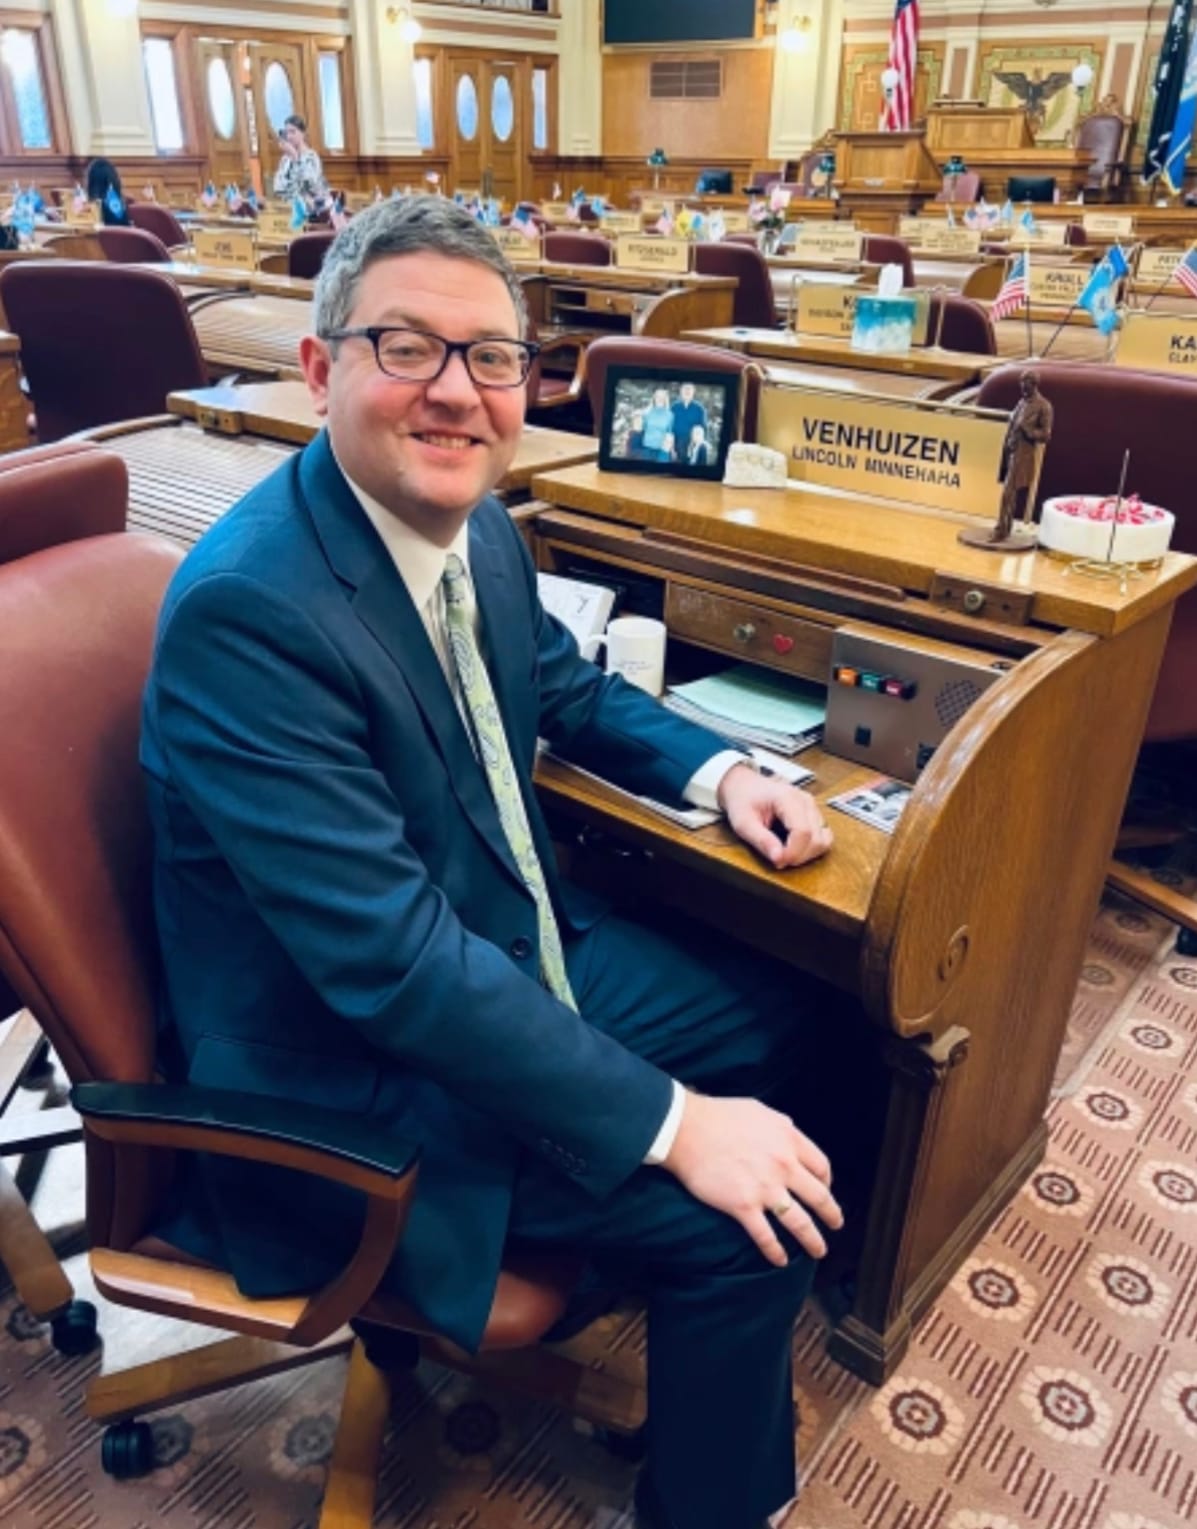 South Dakota Rep. Tony Venhuizen poses for a photo at his desk in the Legislature.